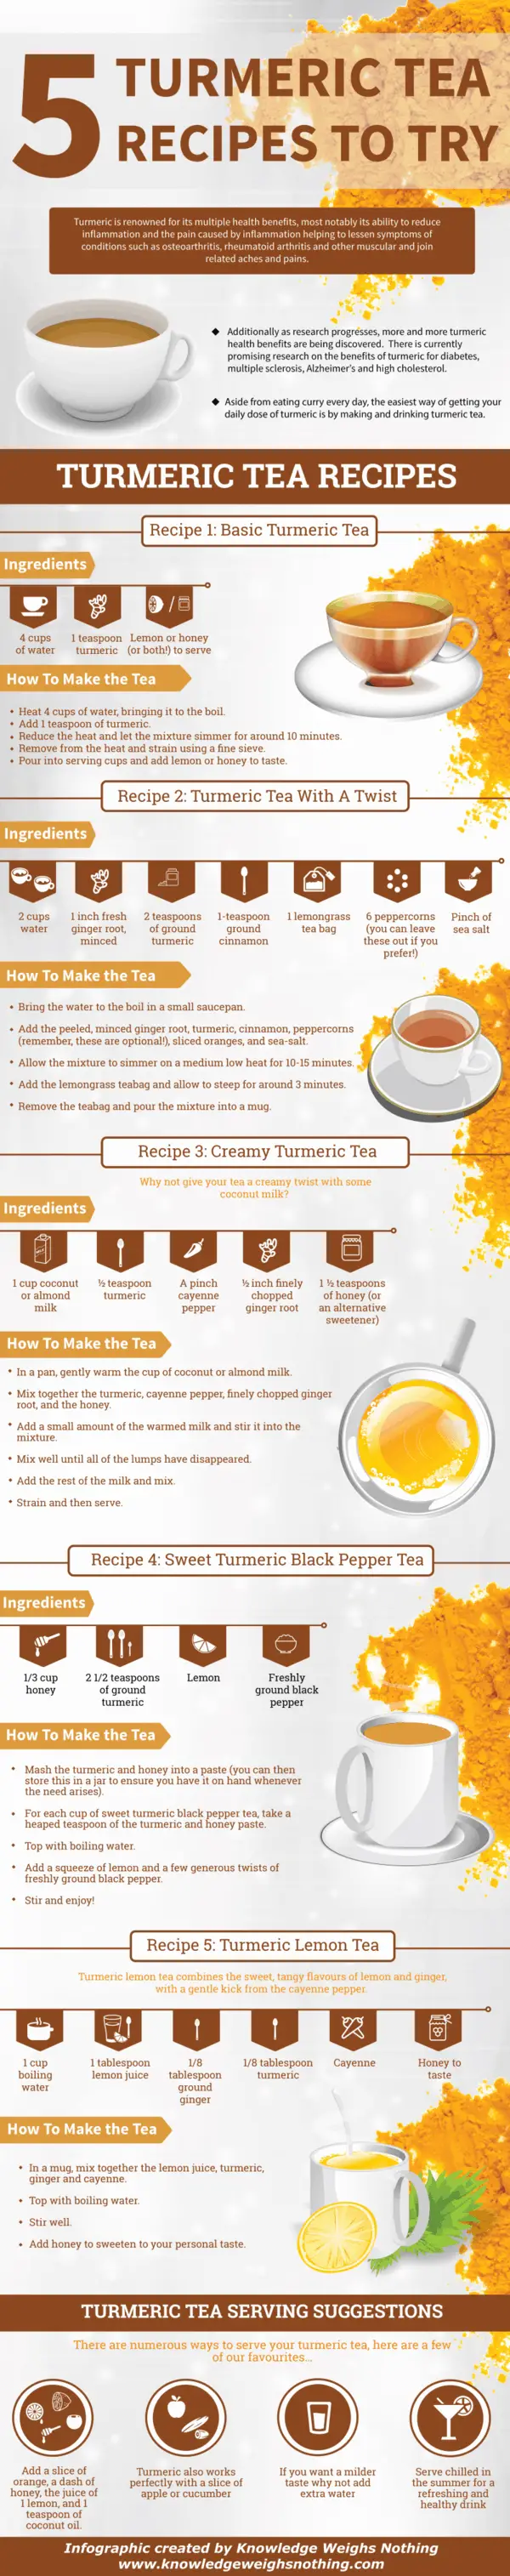 Turmeric tea recipe infographic